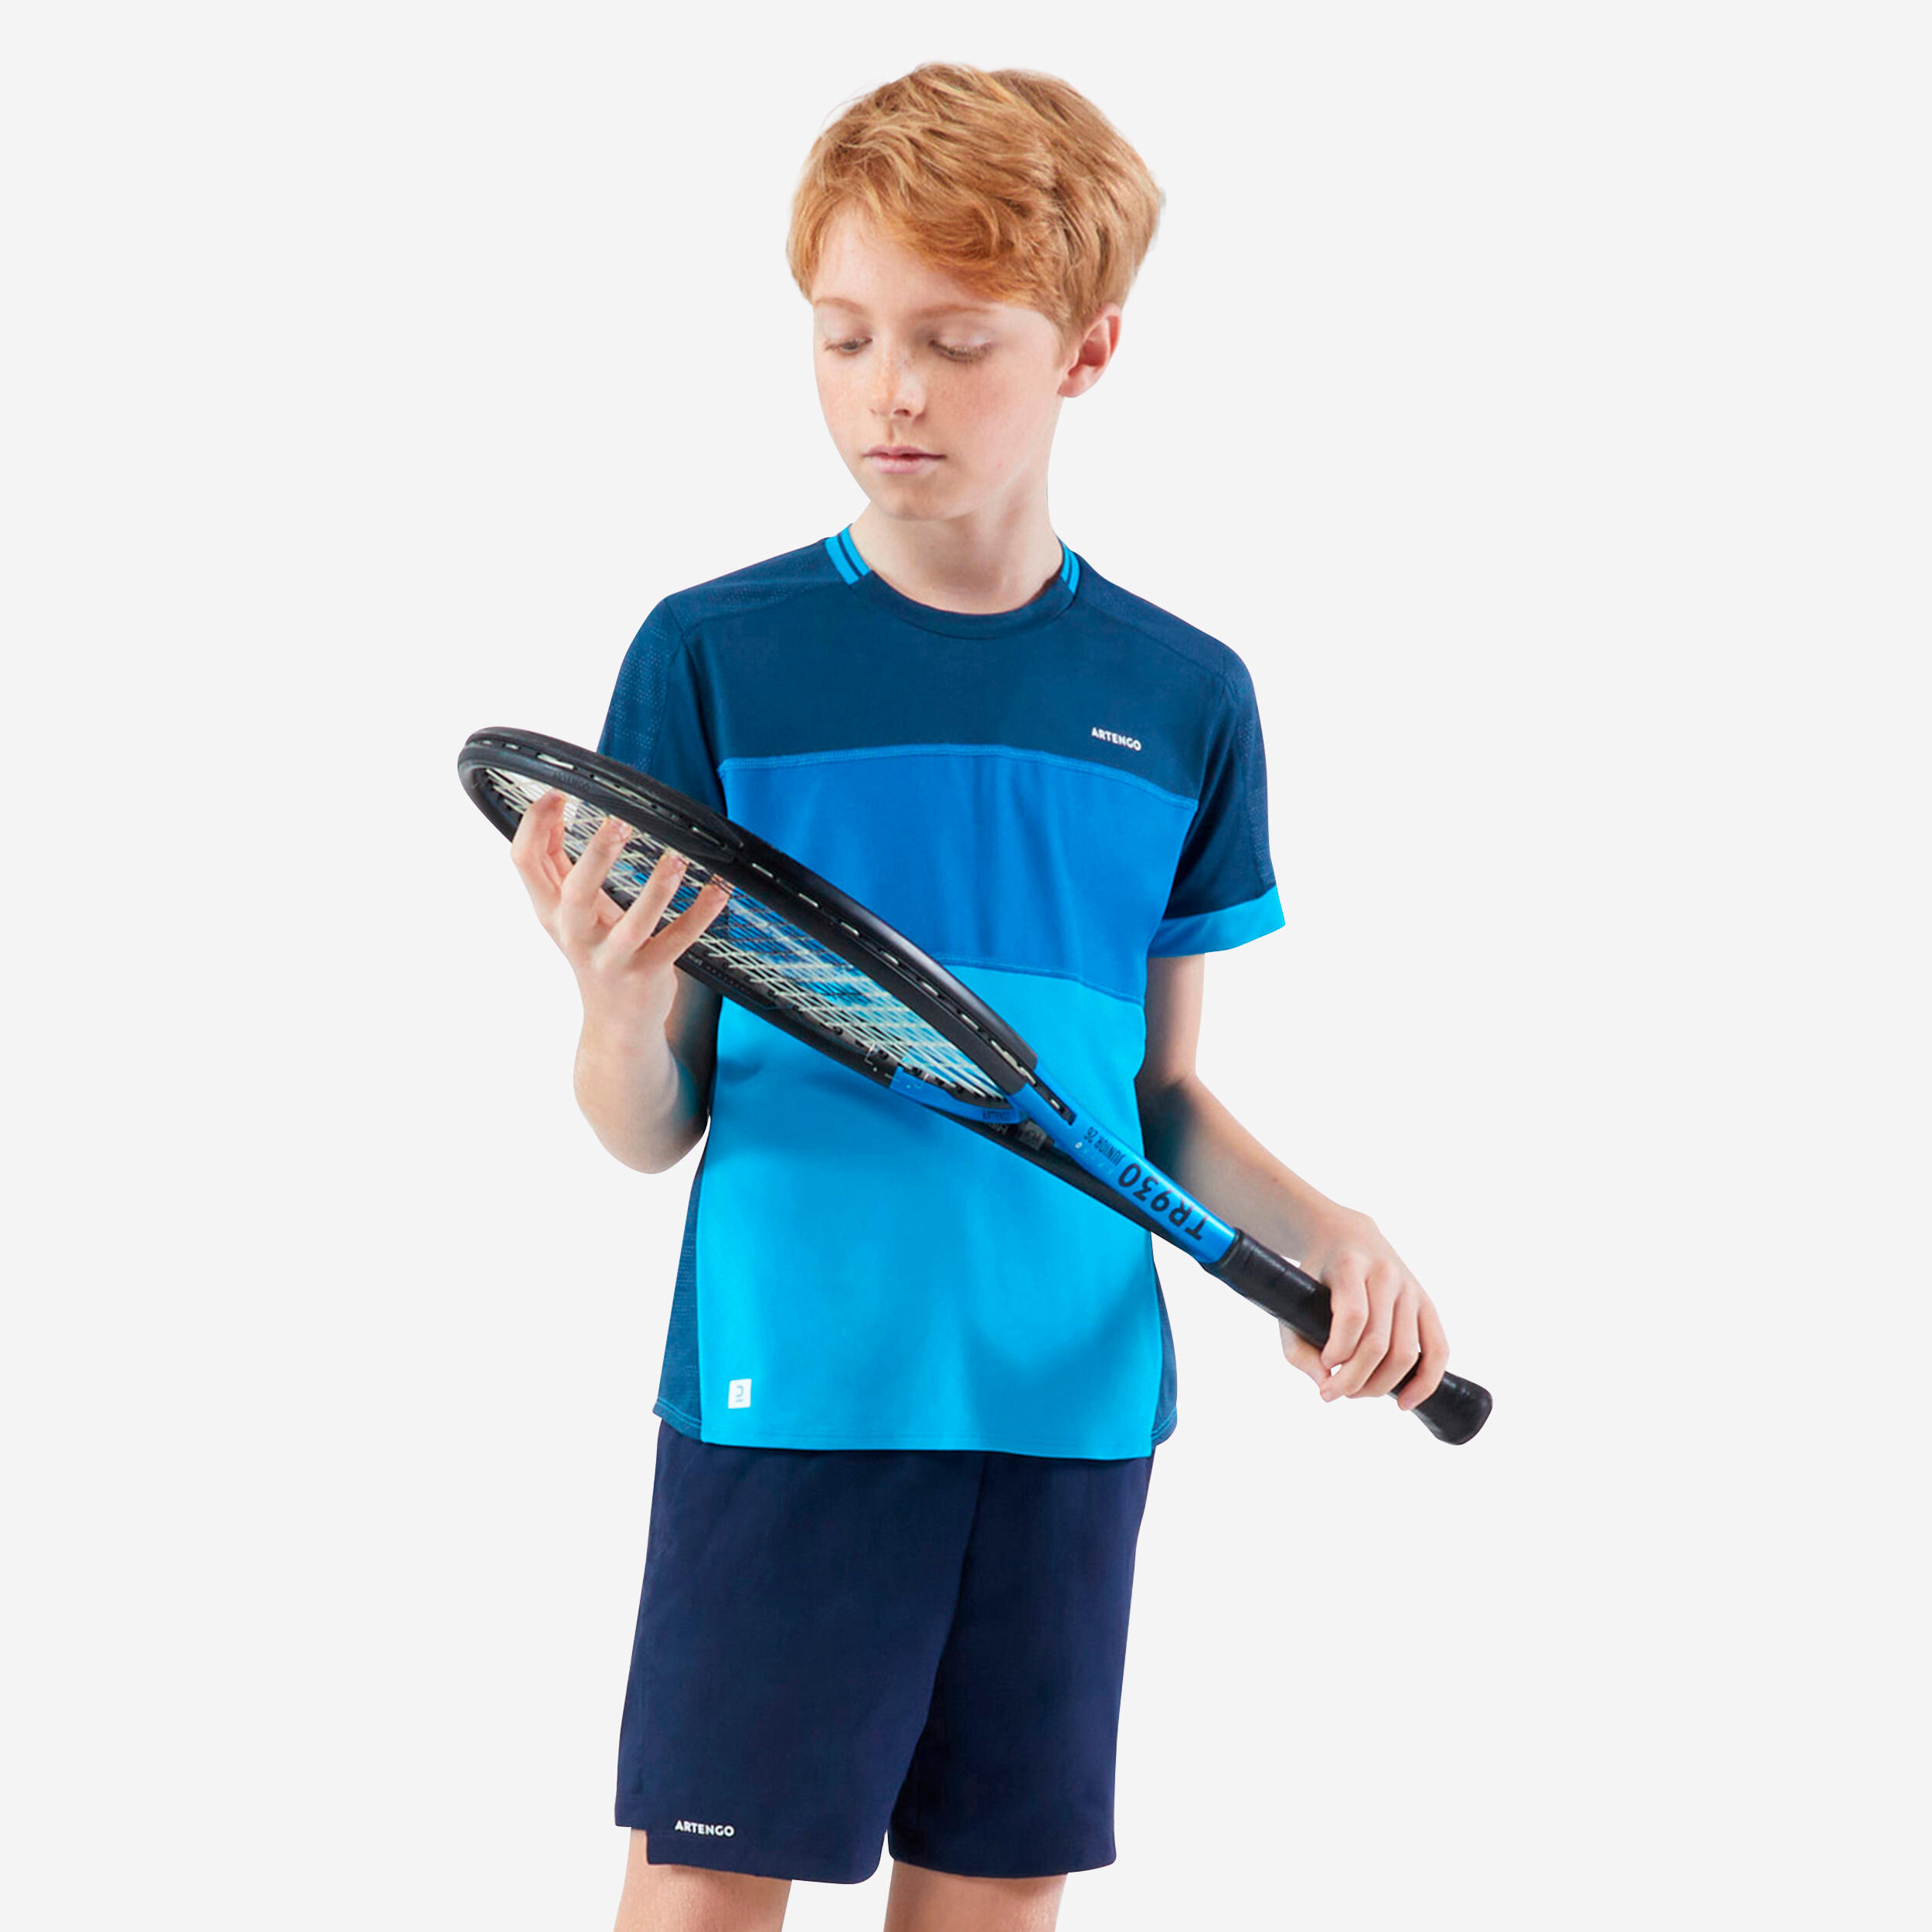 ARTENGO Boys' Tennis T-Shirt Dry - Blue